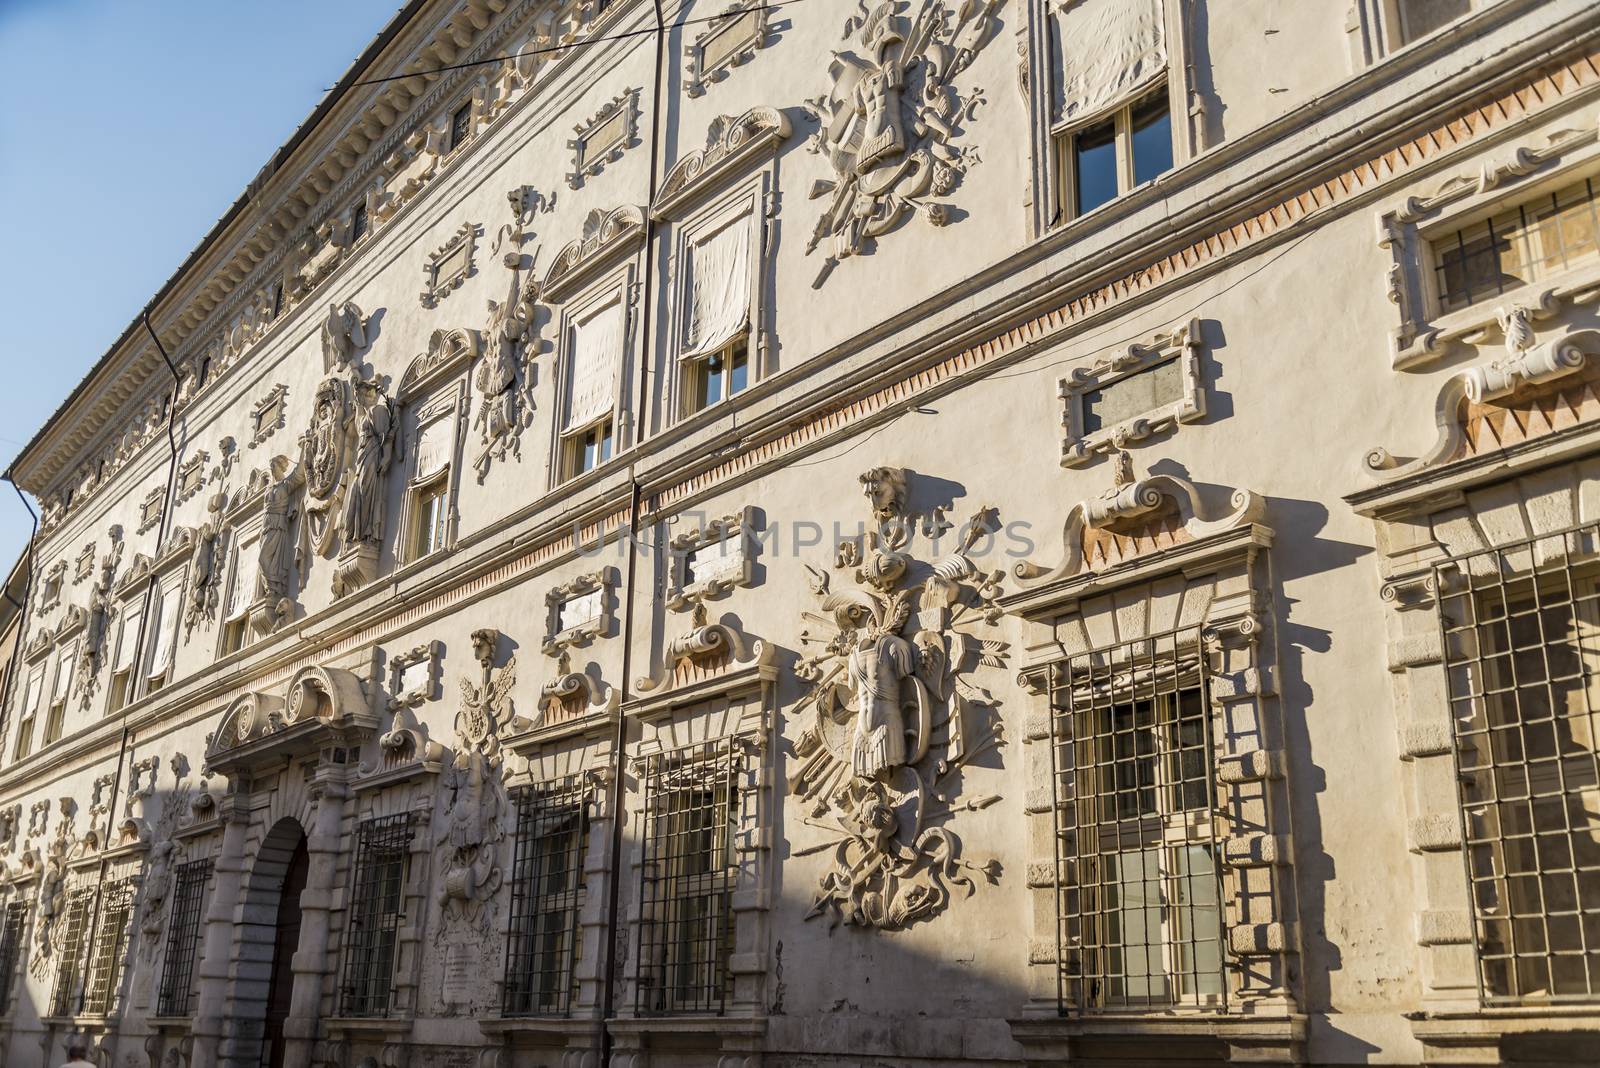 Details of Palazzo Bentivoglio, a late-Renaissance palace located in Ferrara, Italy.